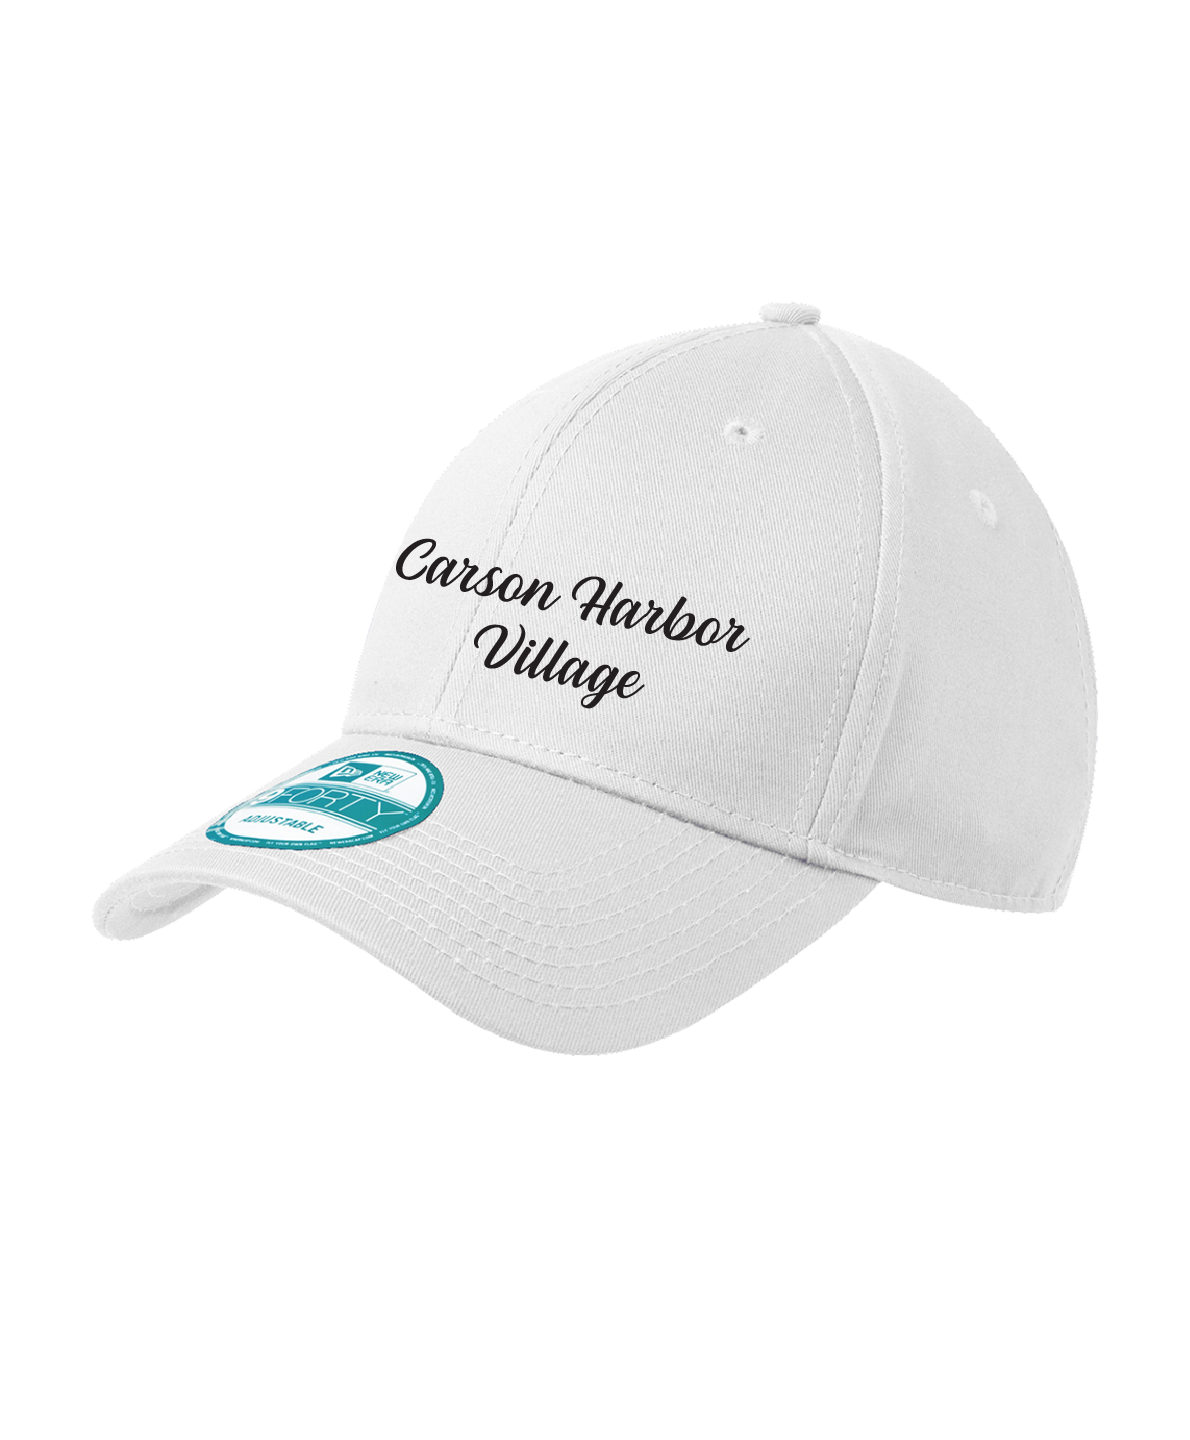 Carson Harbor Village - New Era® - Adjustable Structured Cap